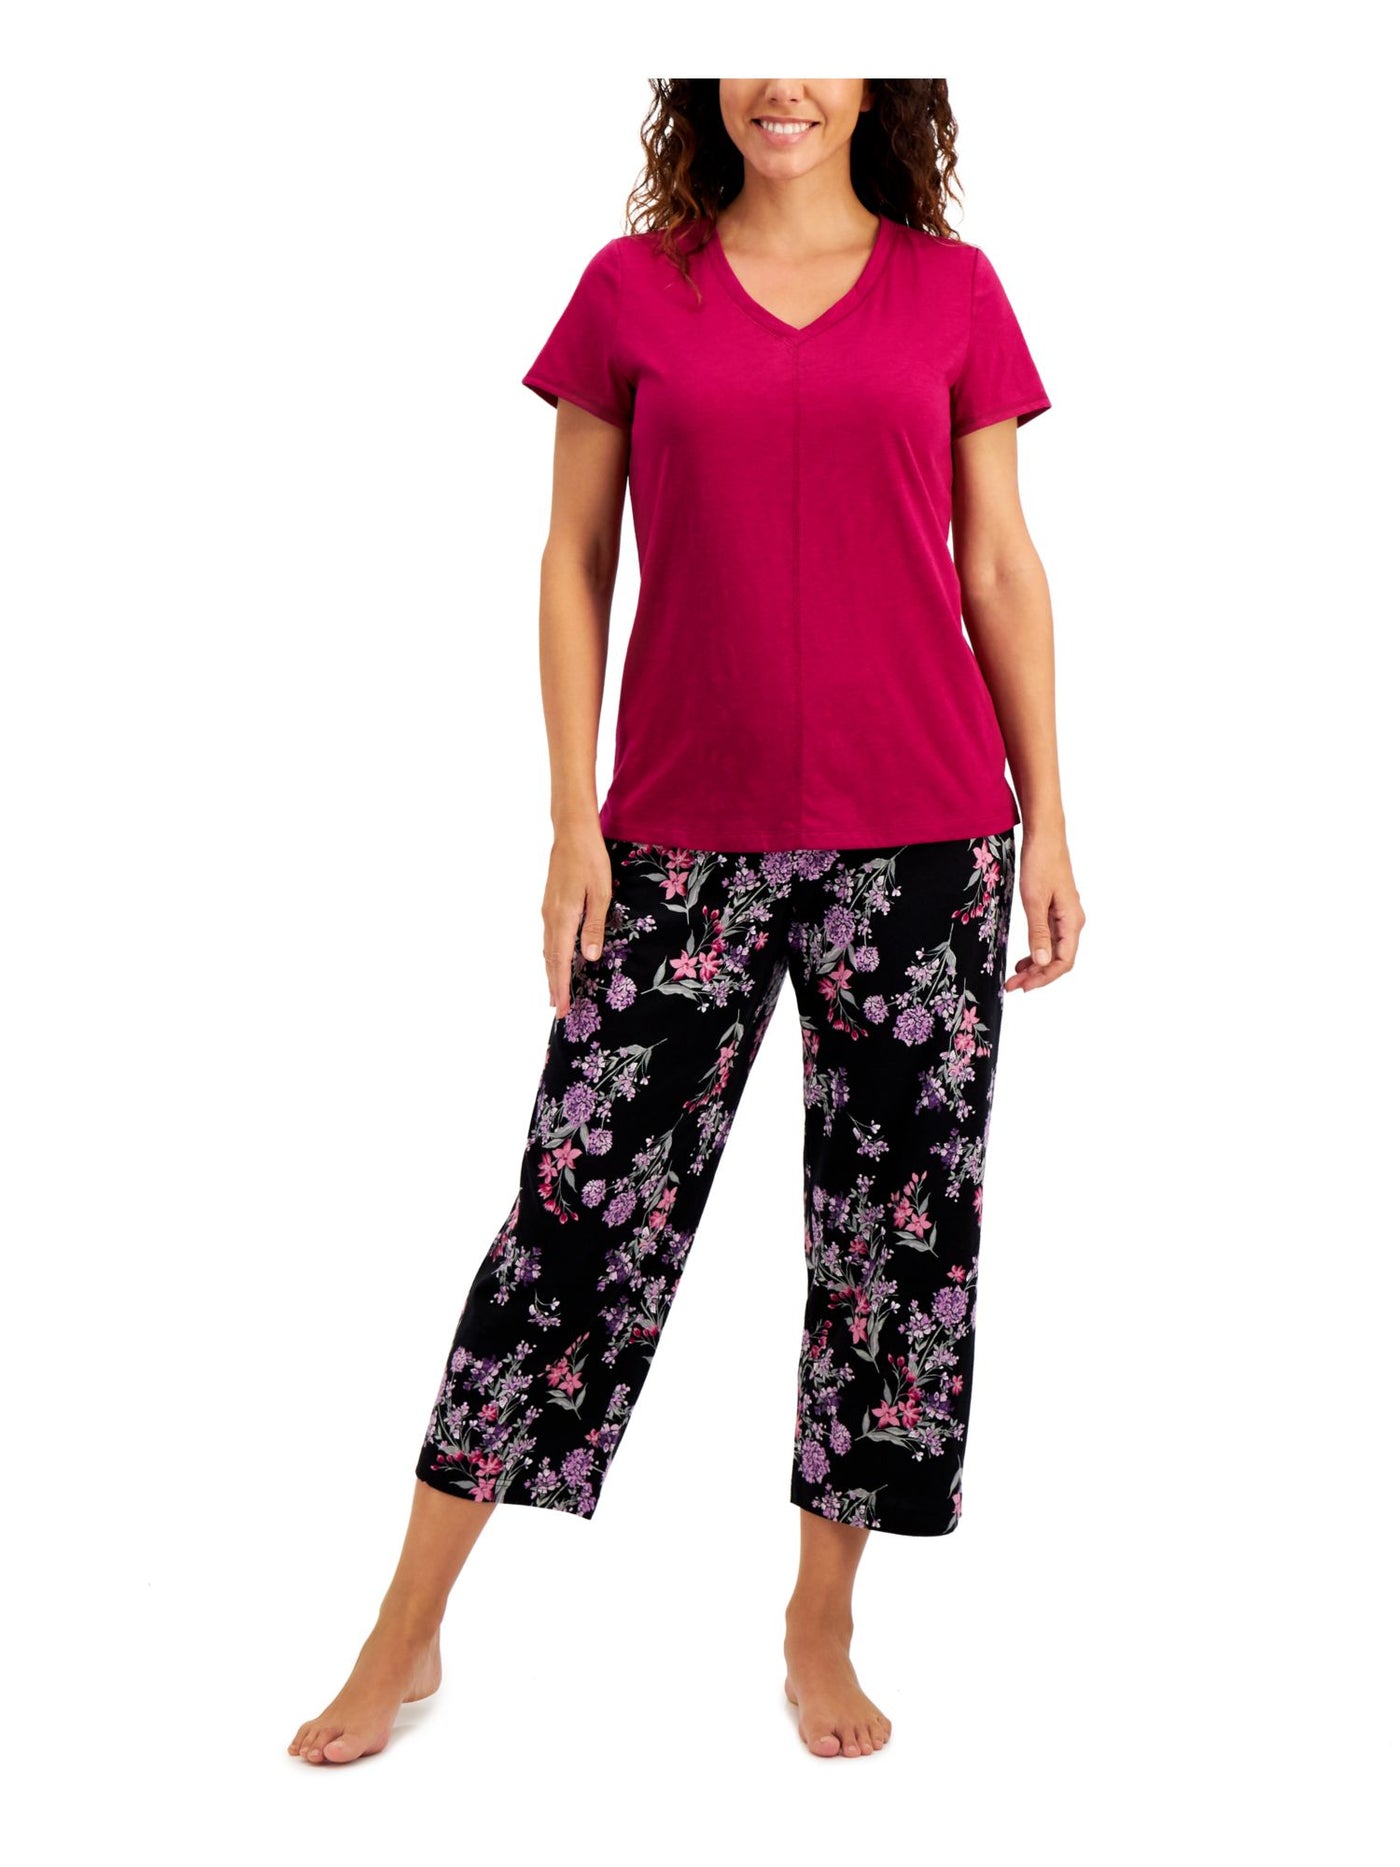 CHARTER CLUB Intimates Pink Jersey Pullover Seam Along Center Front Sleep Shirt Pajama Top XS